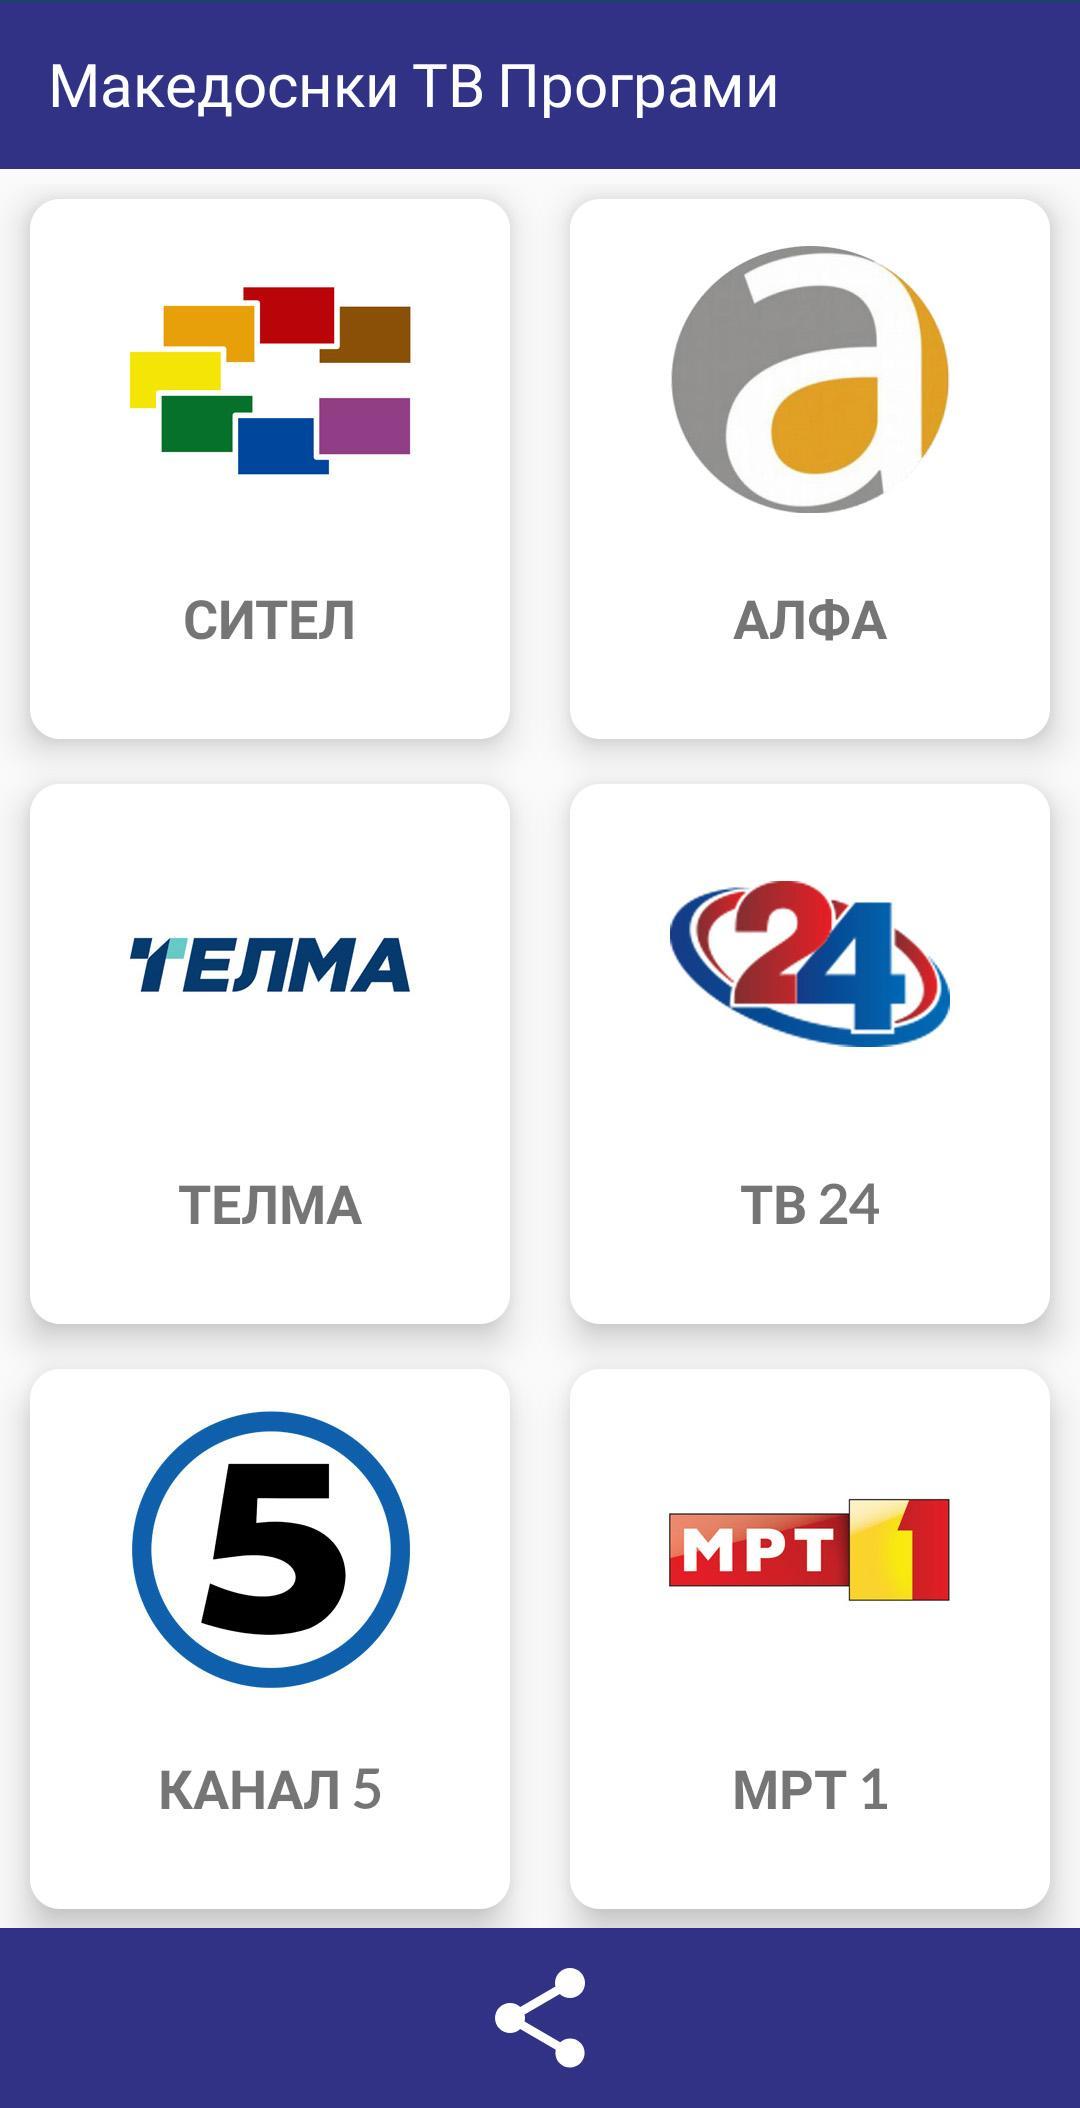 Makedonski TV Kanali APK Download for Android - Latest Version